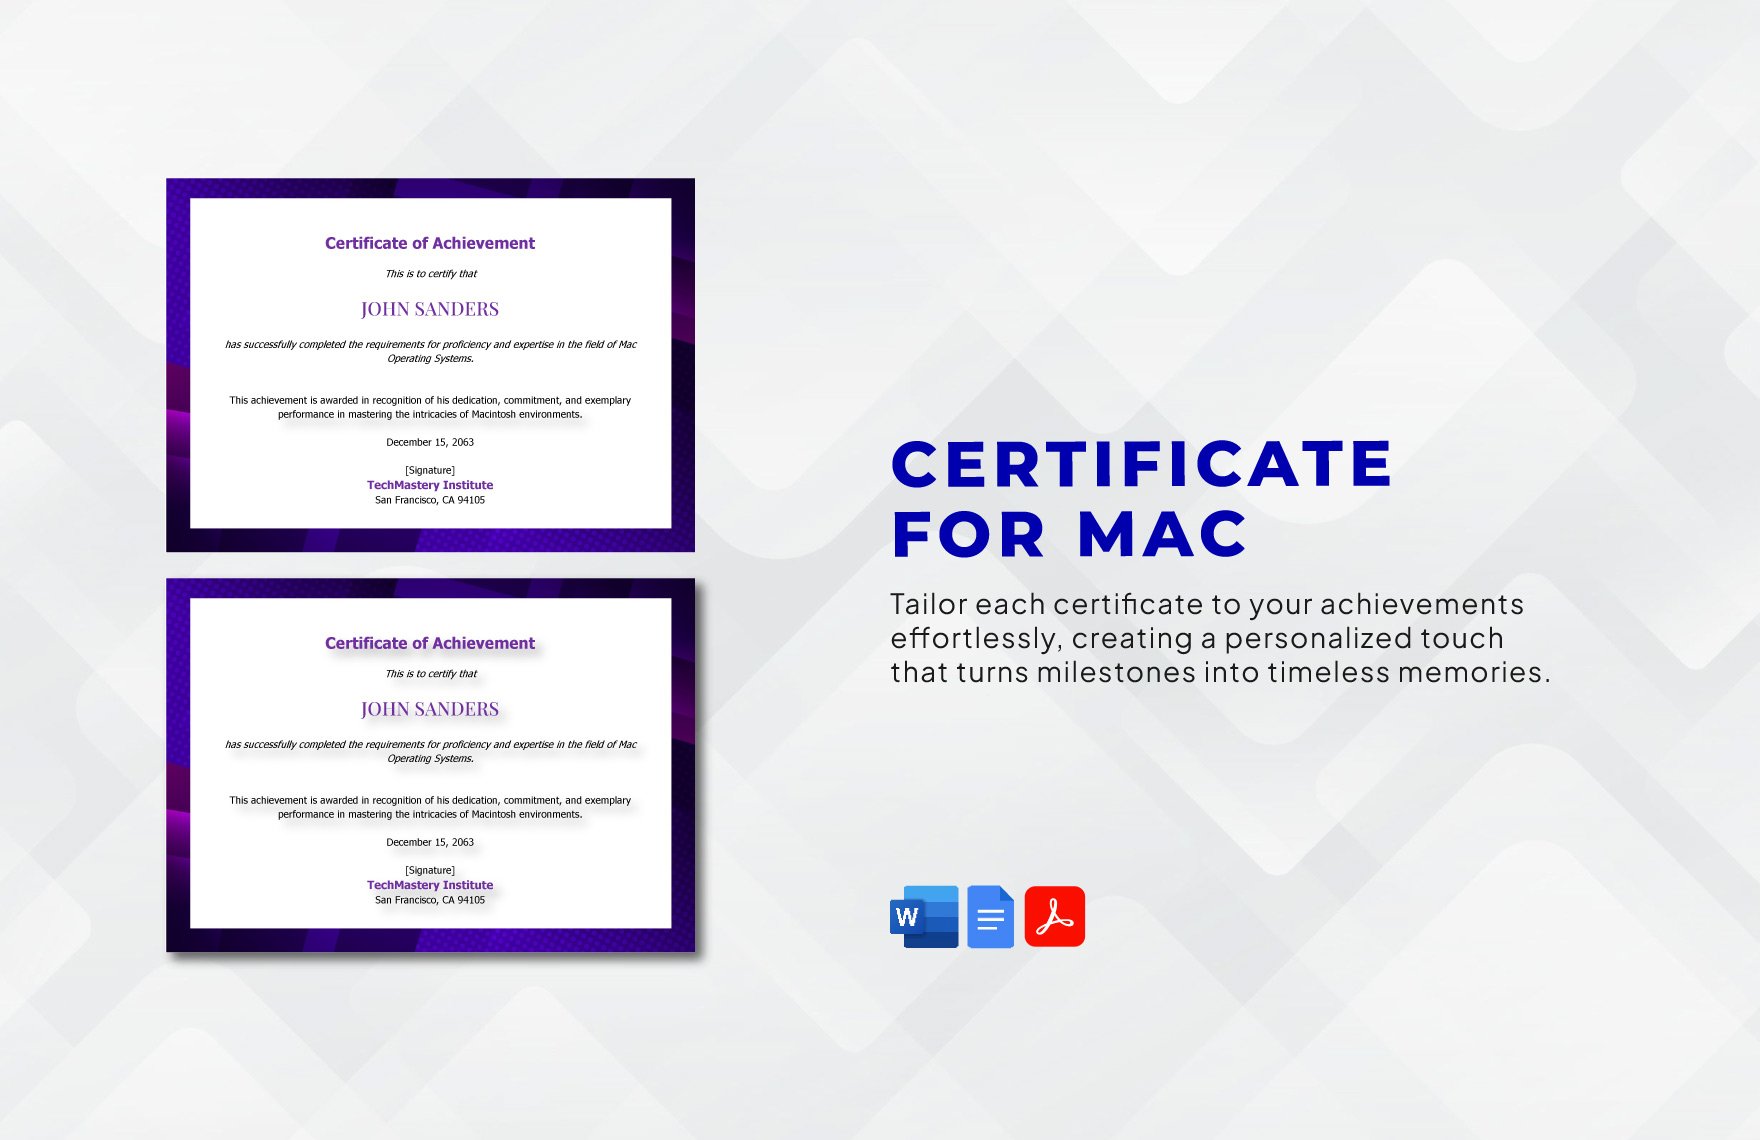 Certificate for Mac Template